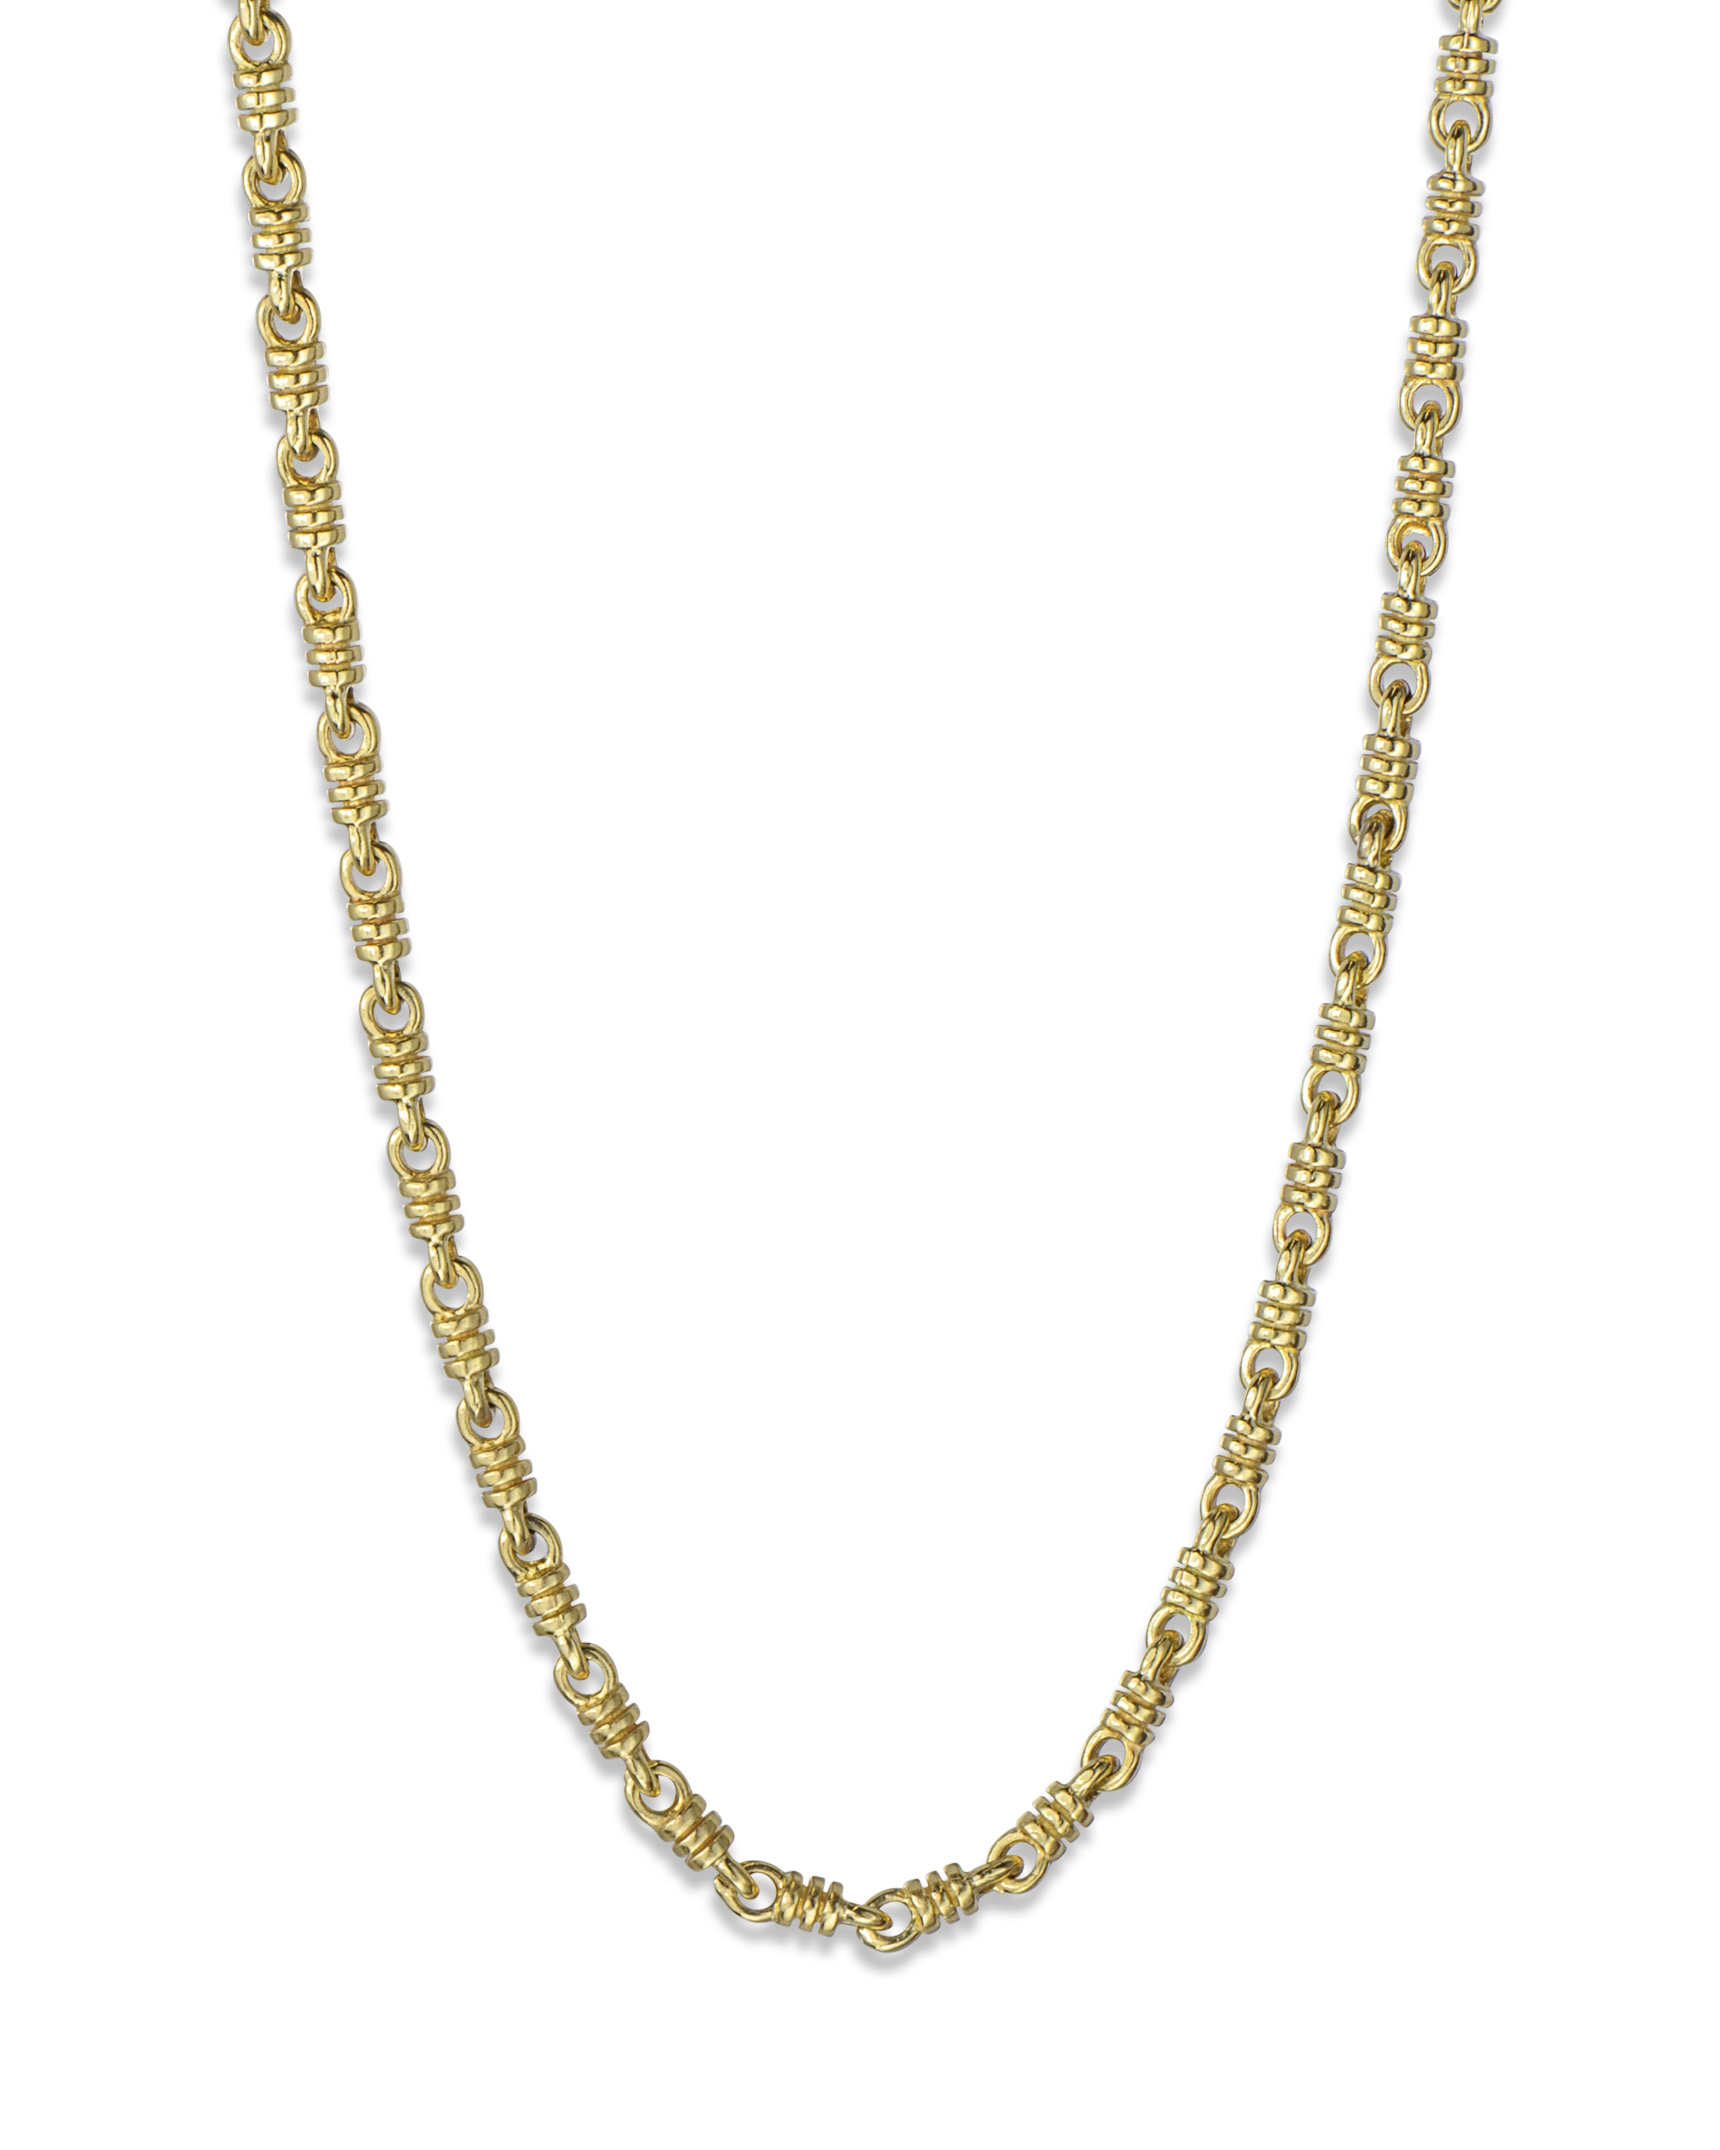 Black Spinel and Handmade Gold Bead Necklace - Turgeon Raine